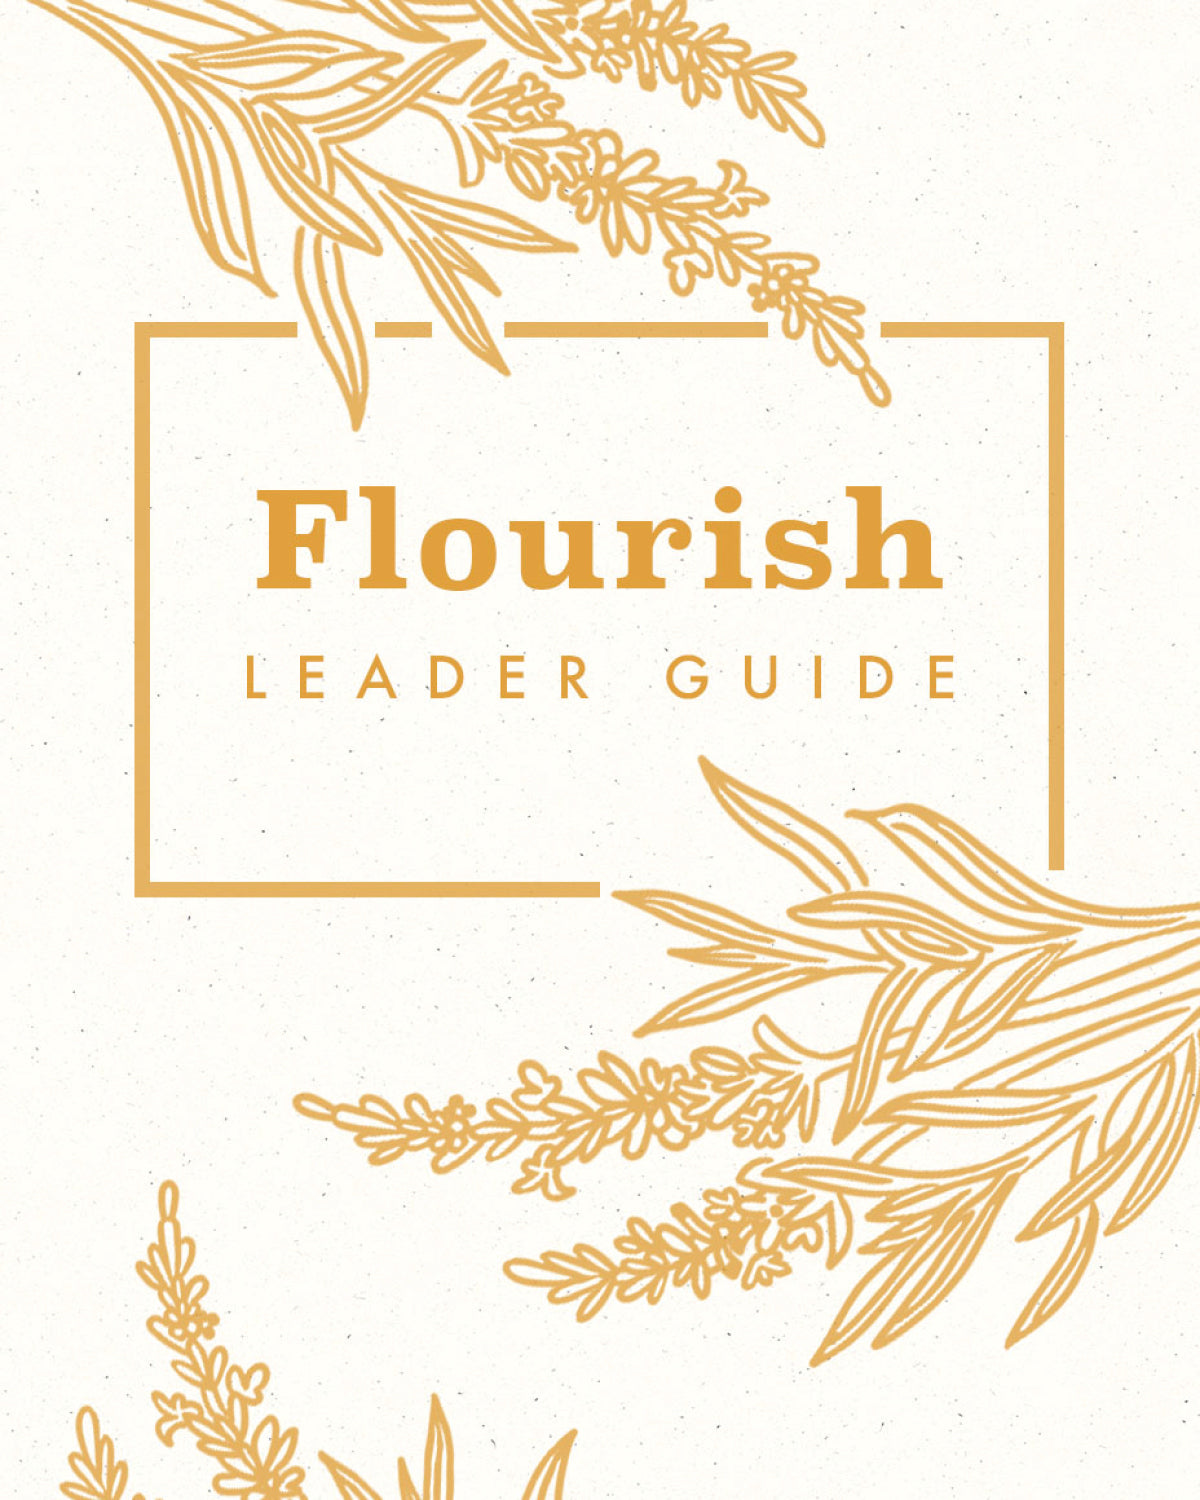 Flourish Leader Guide [FREE PDF]